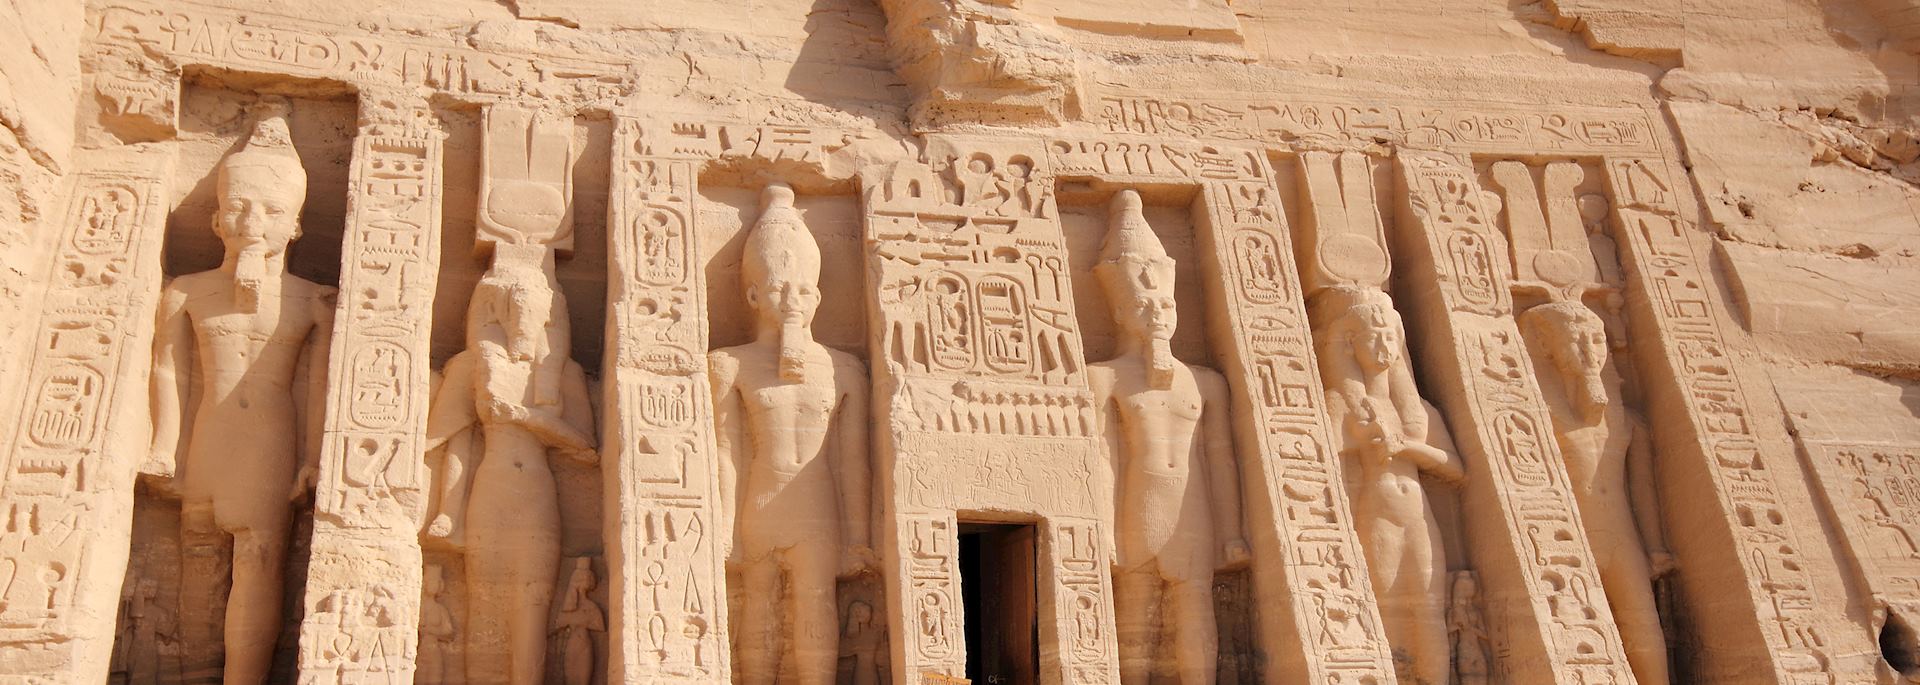 Temple of Nefertari, Abu Simbel